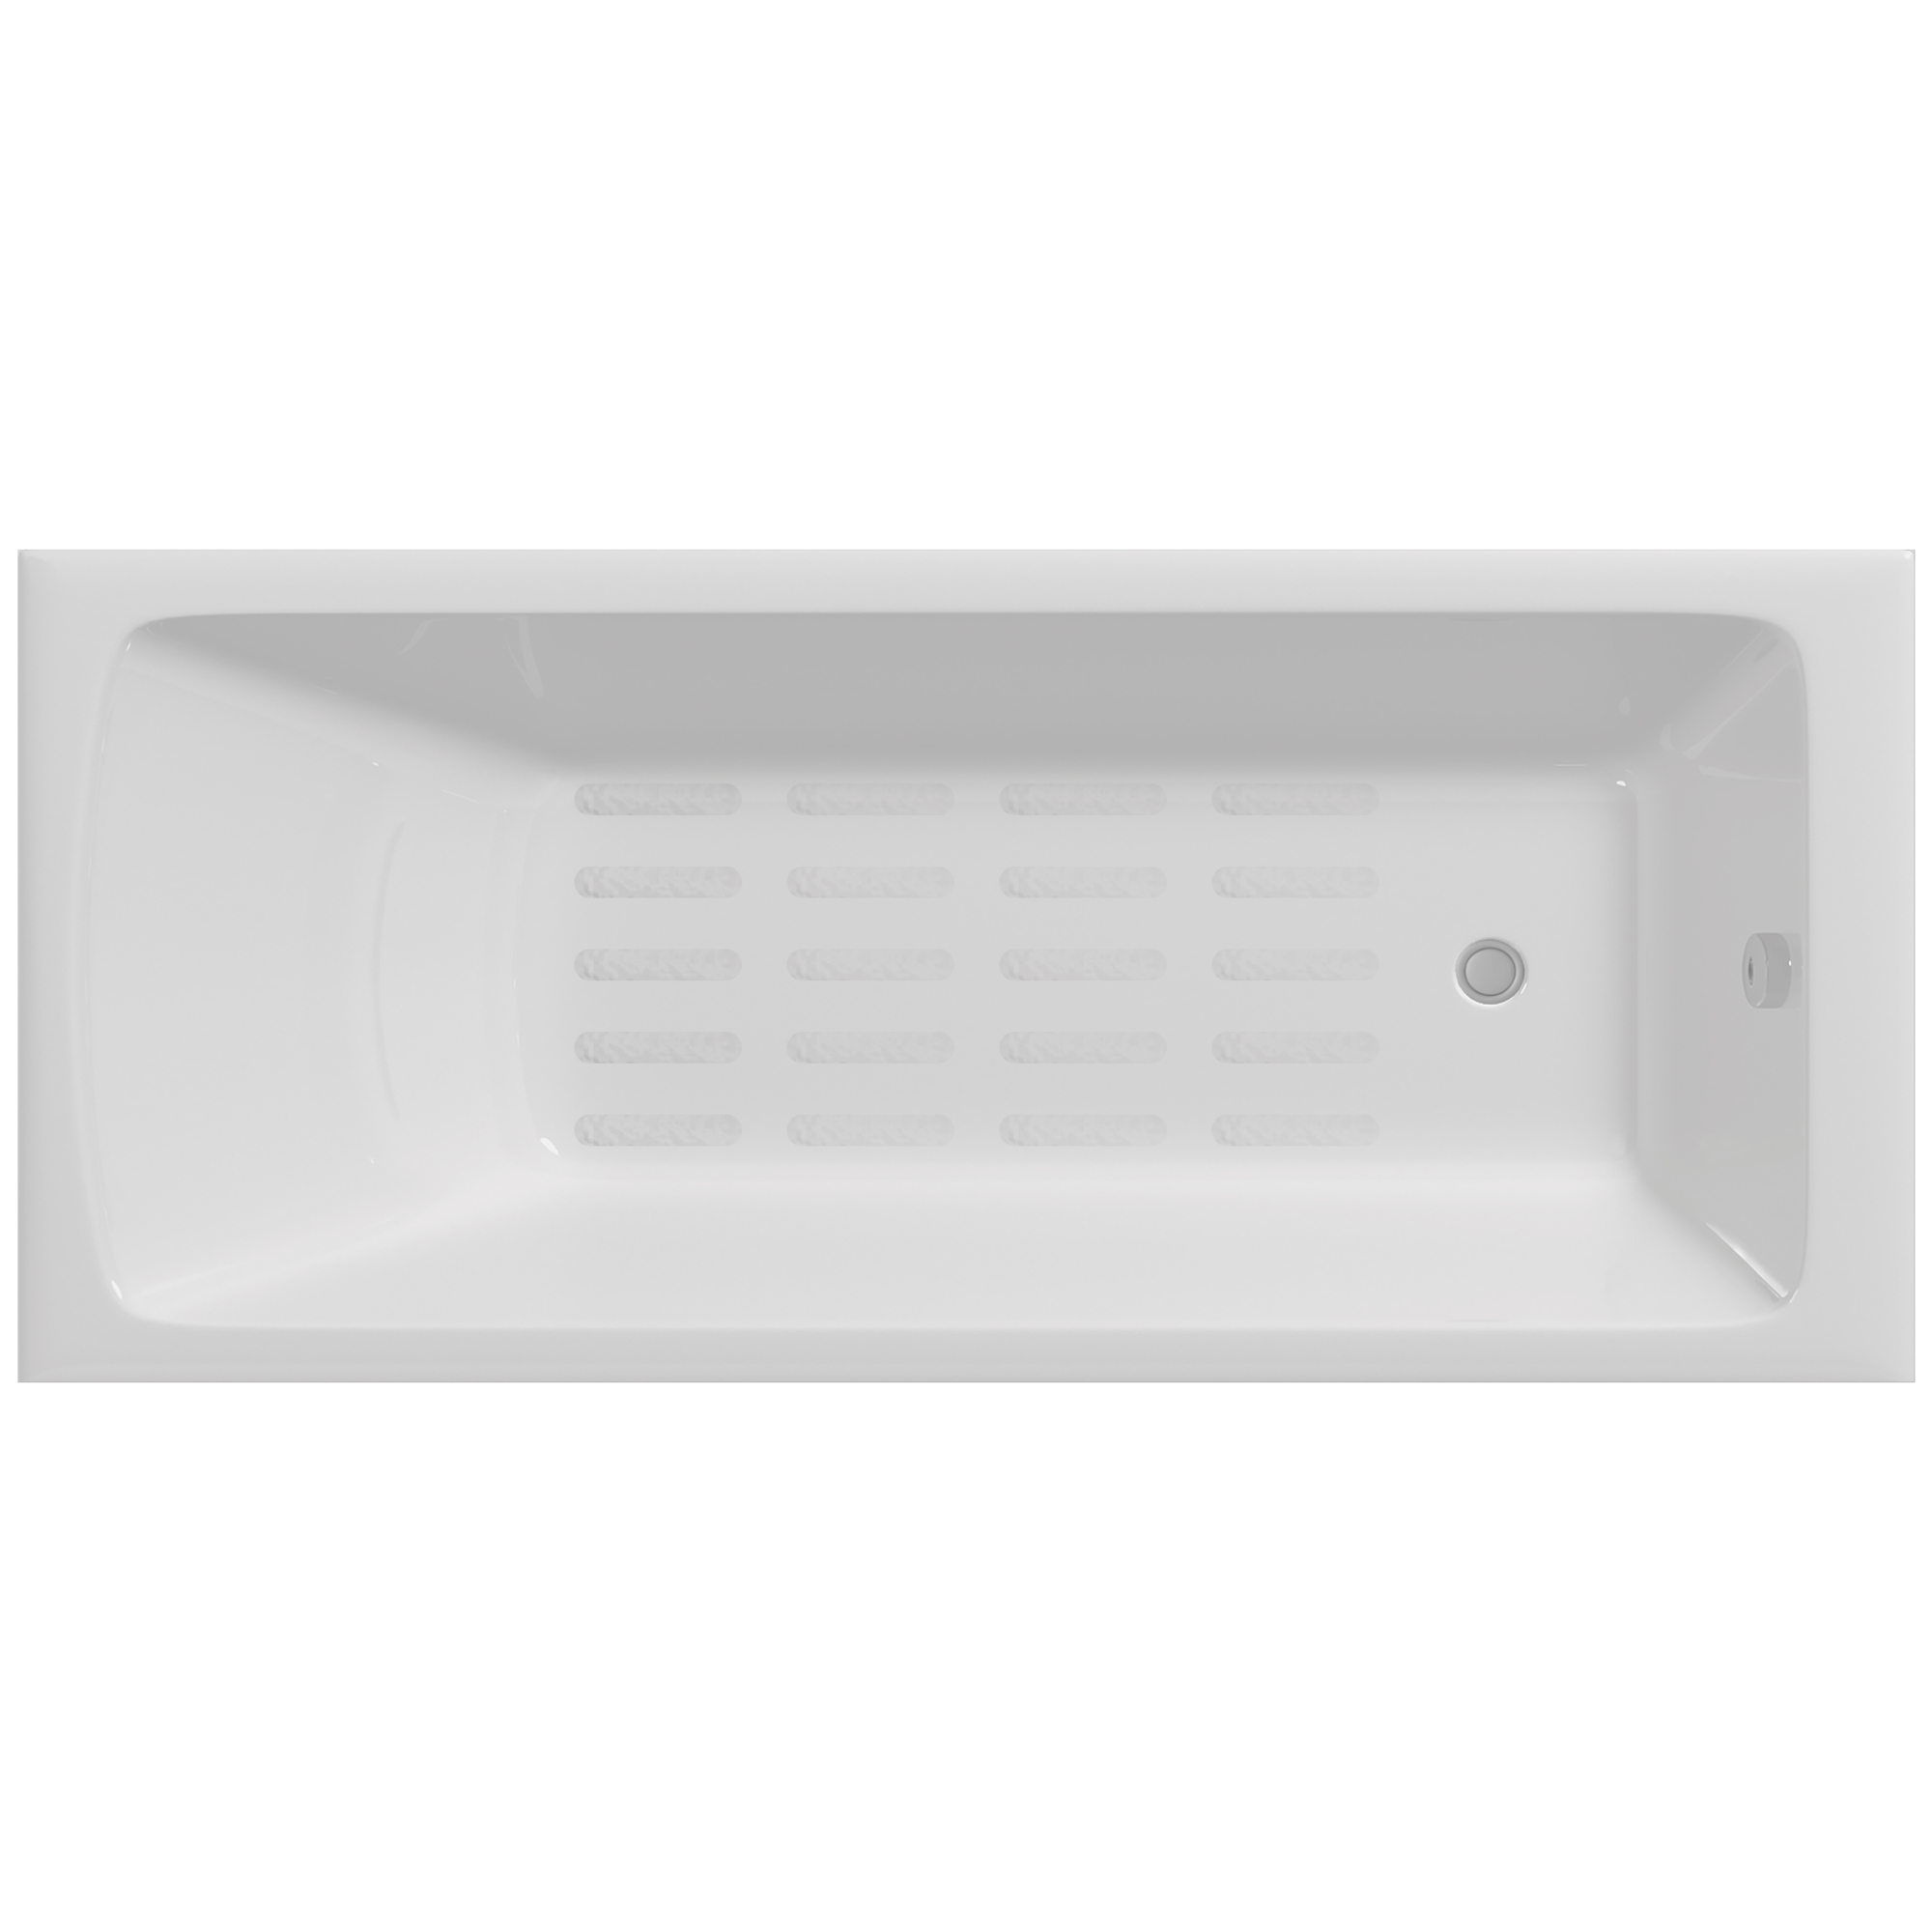 Чугунная ванна Delice Camelot 180х80 DLR230616-AS ванна из литьевого мрамора и стиль риспекта 180х80